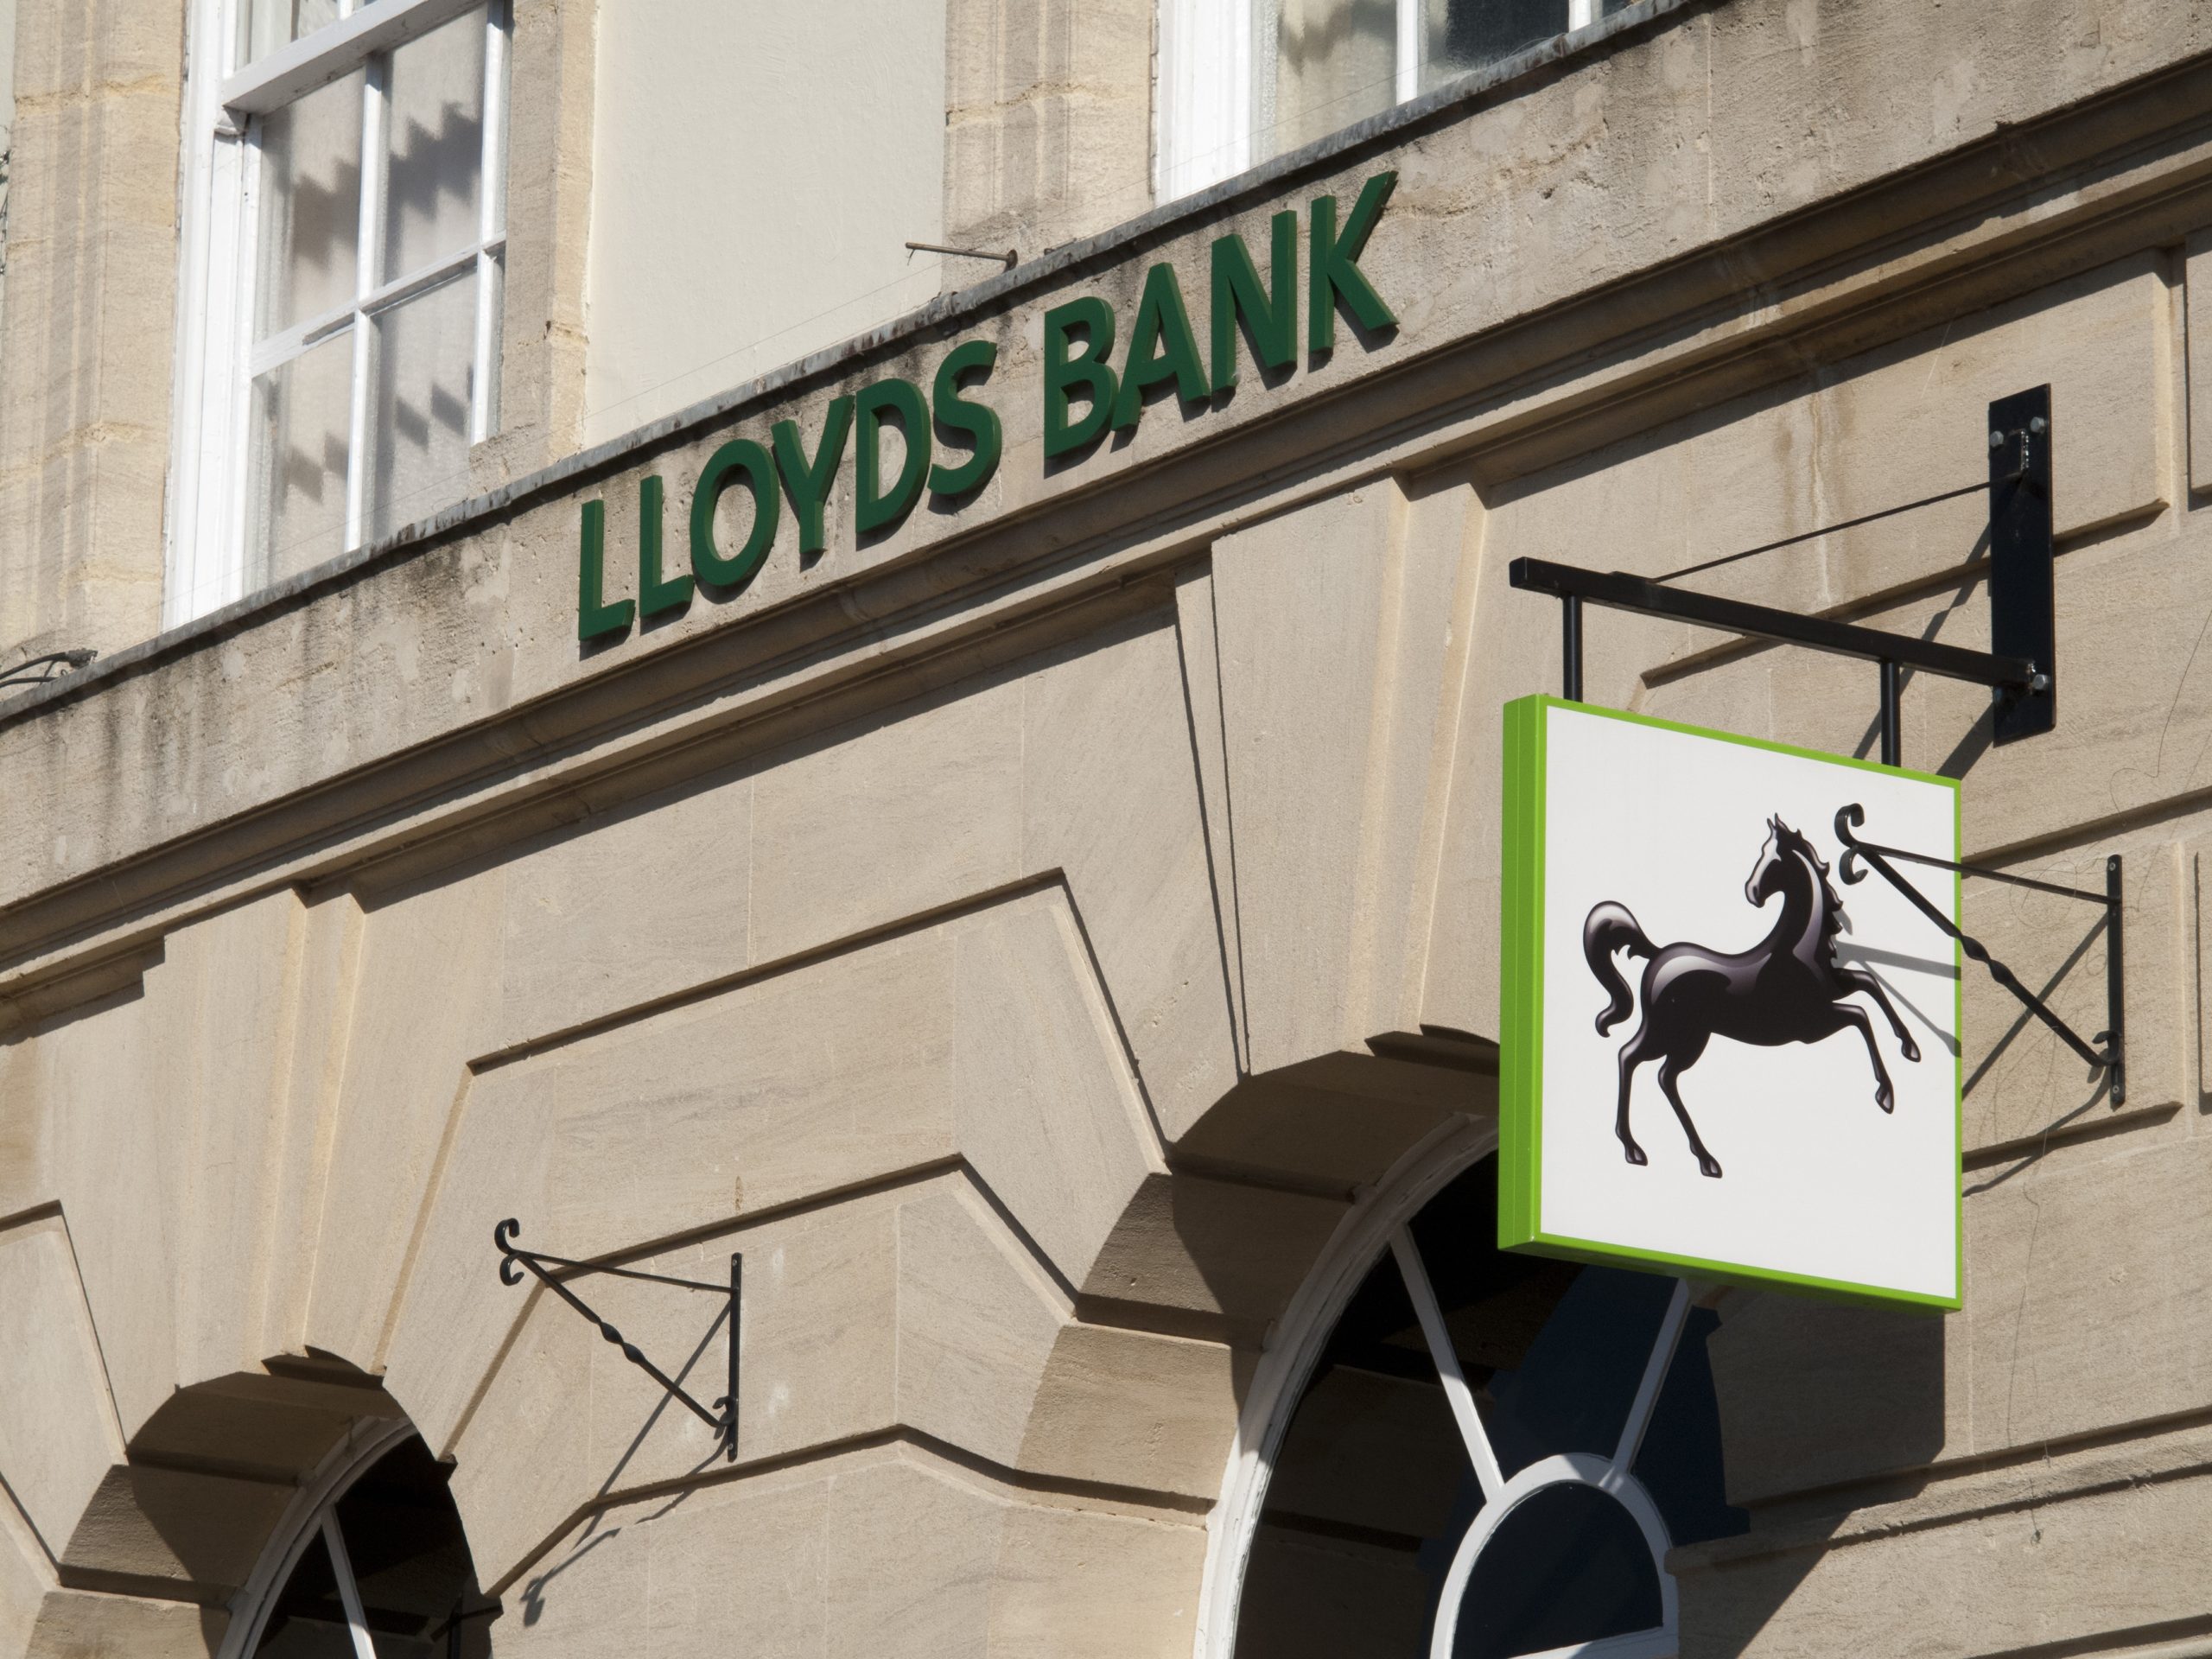 Lloyds Bank loans